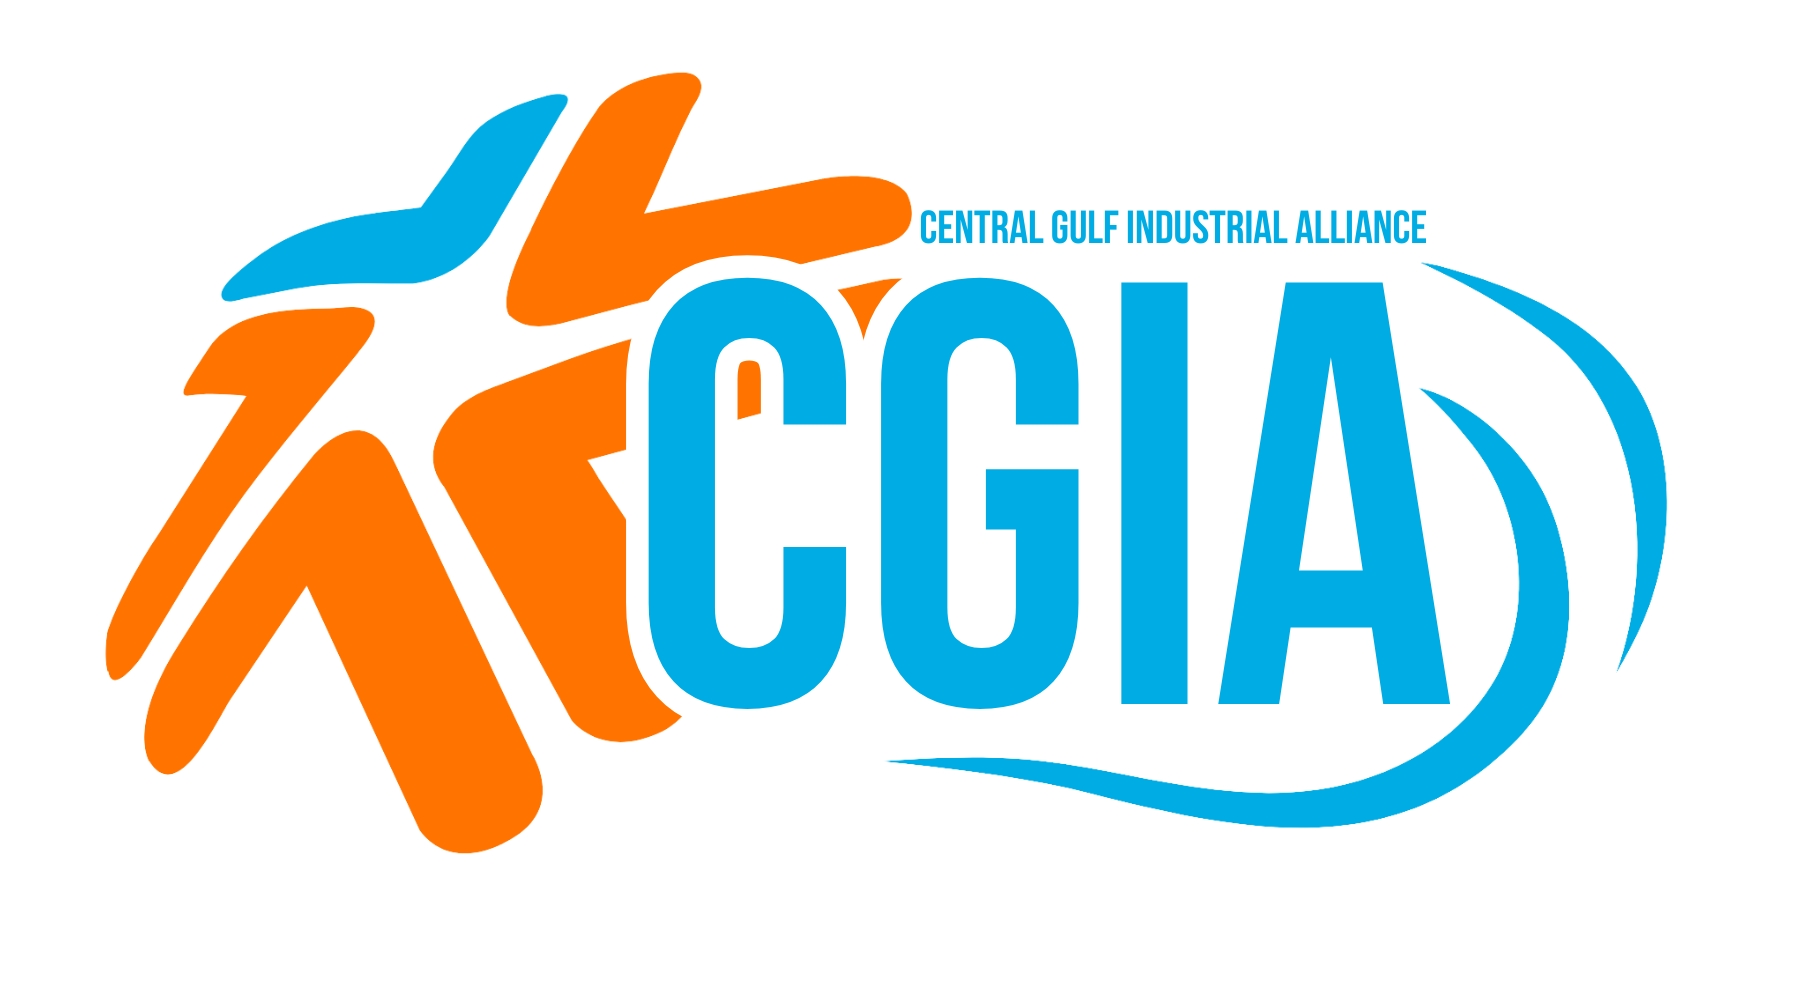 Central Gulf Industrial Alliance